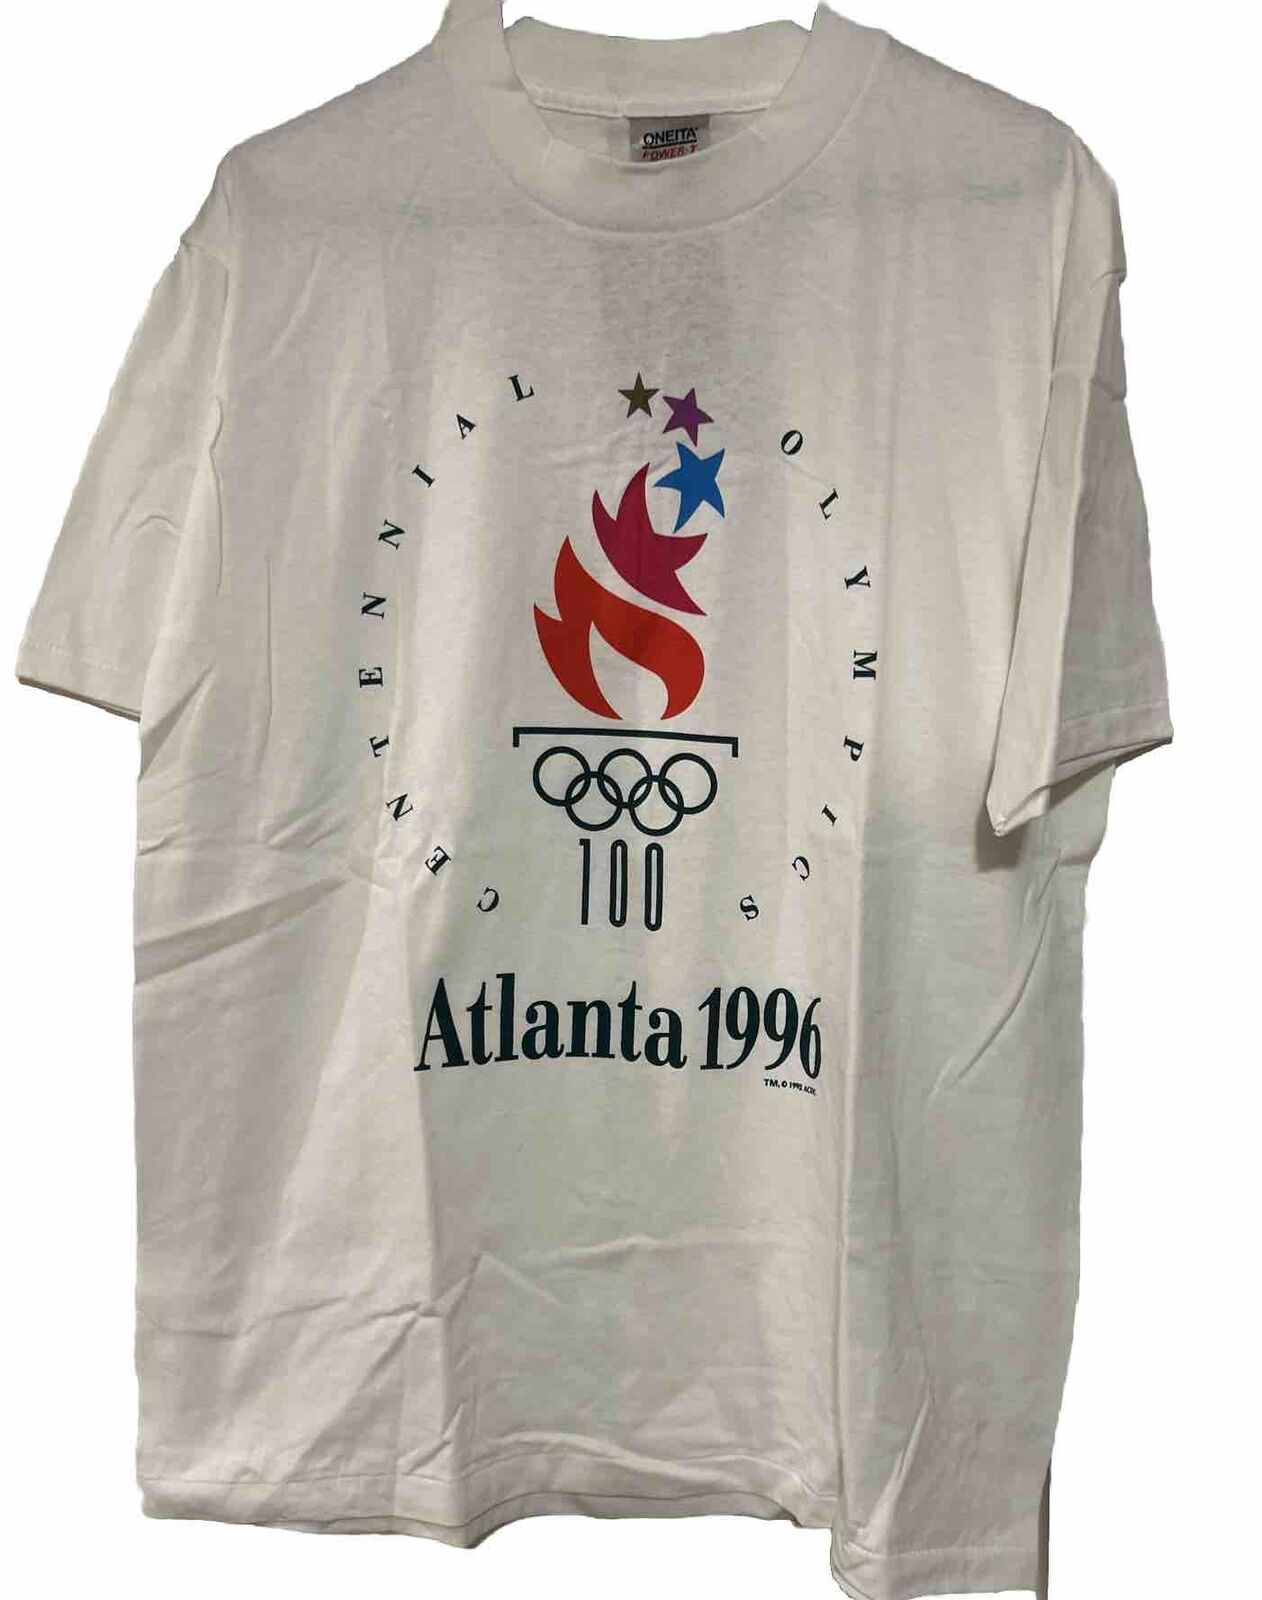 NOS Vintage 1996 Atlanta Olympics T-shirt Single Stitch Champion New W/ Tag Sz L